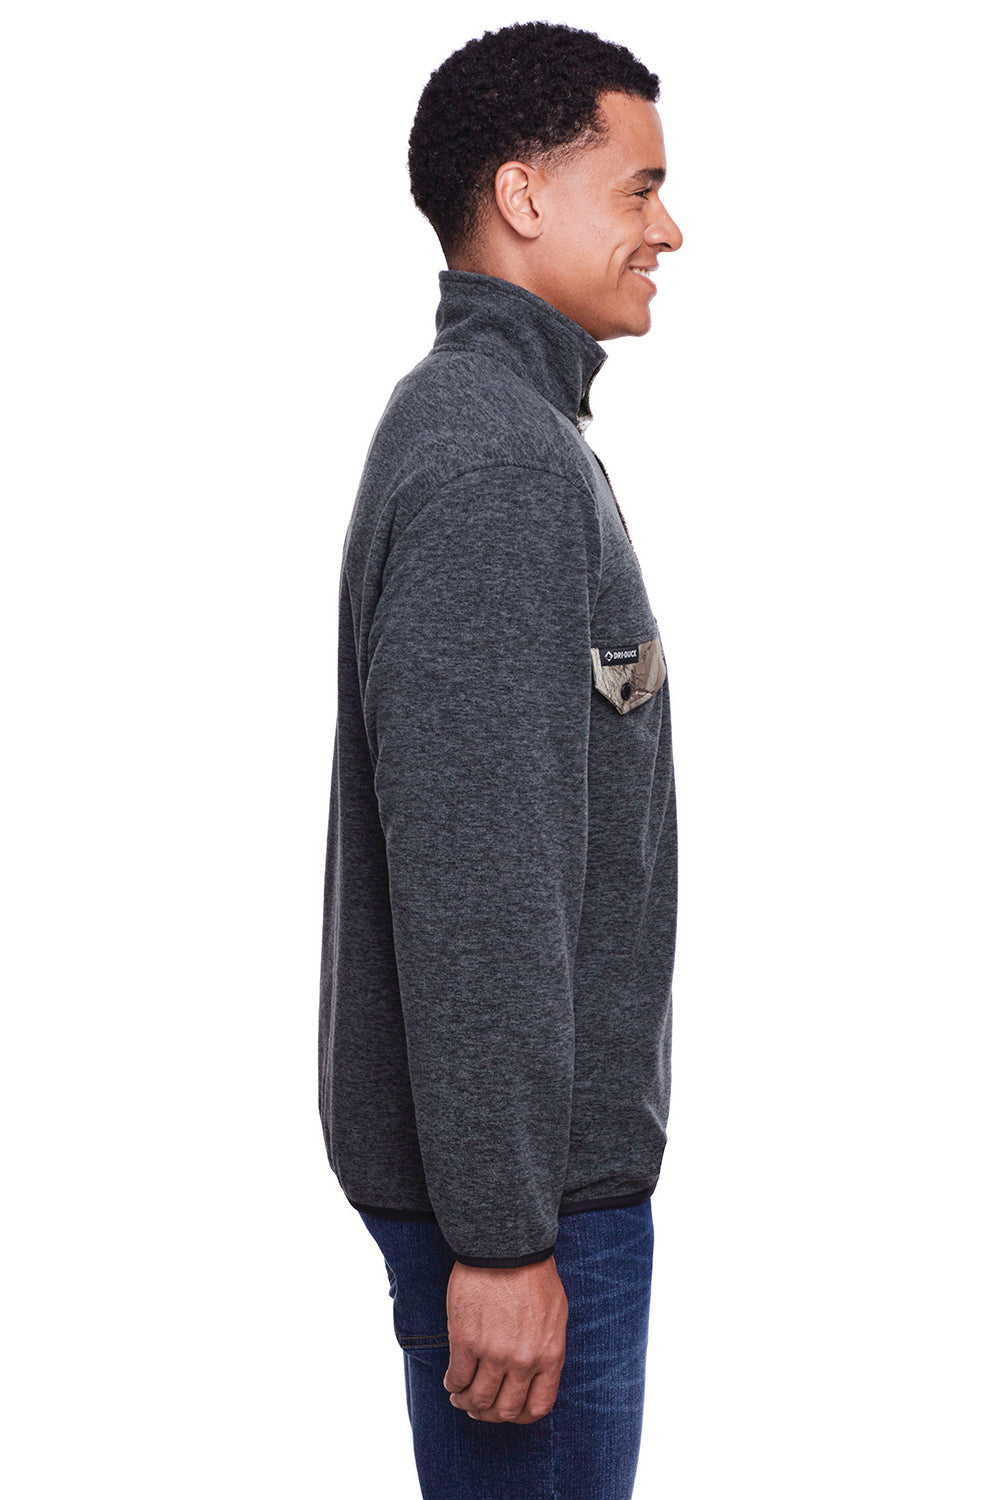 Dri Duck 7352 Mens Denali Fleece 1/4 Zip Sweatshirt Charcoal Grey/Real Tree Camo Side